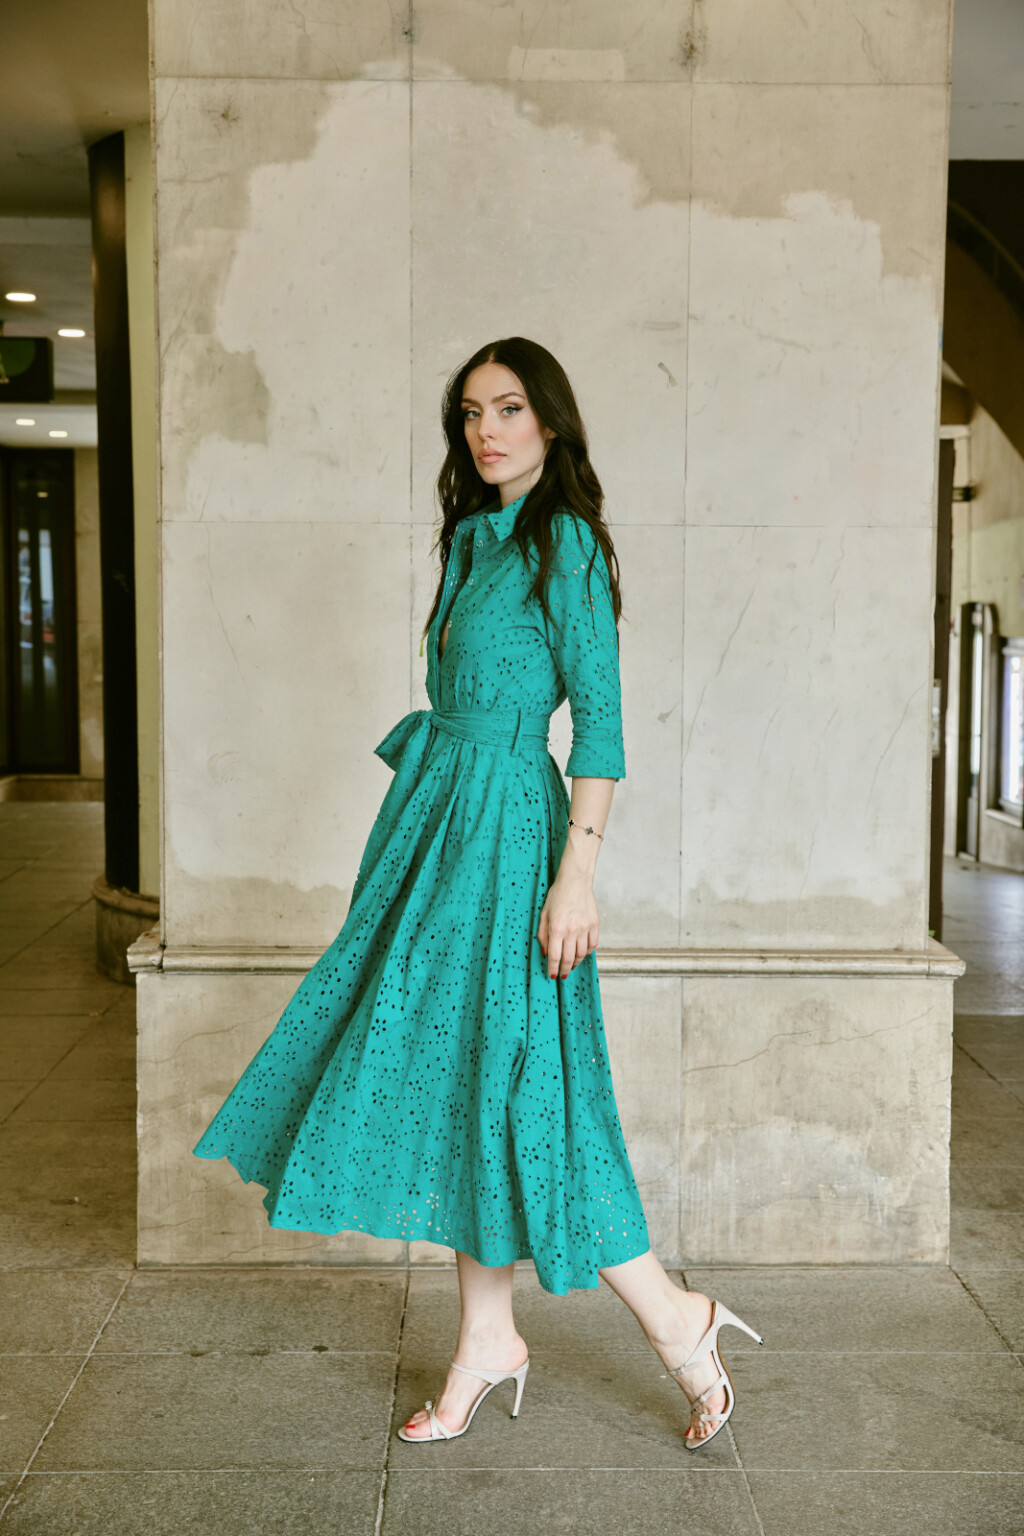 Hrvatski brend DeLight ima prekrasnu kolekciju ljetnih haljina od najfinijih prirodnih tkanina - 1